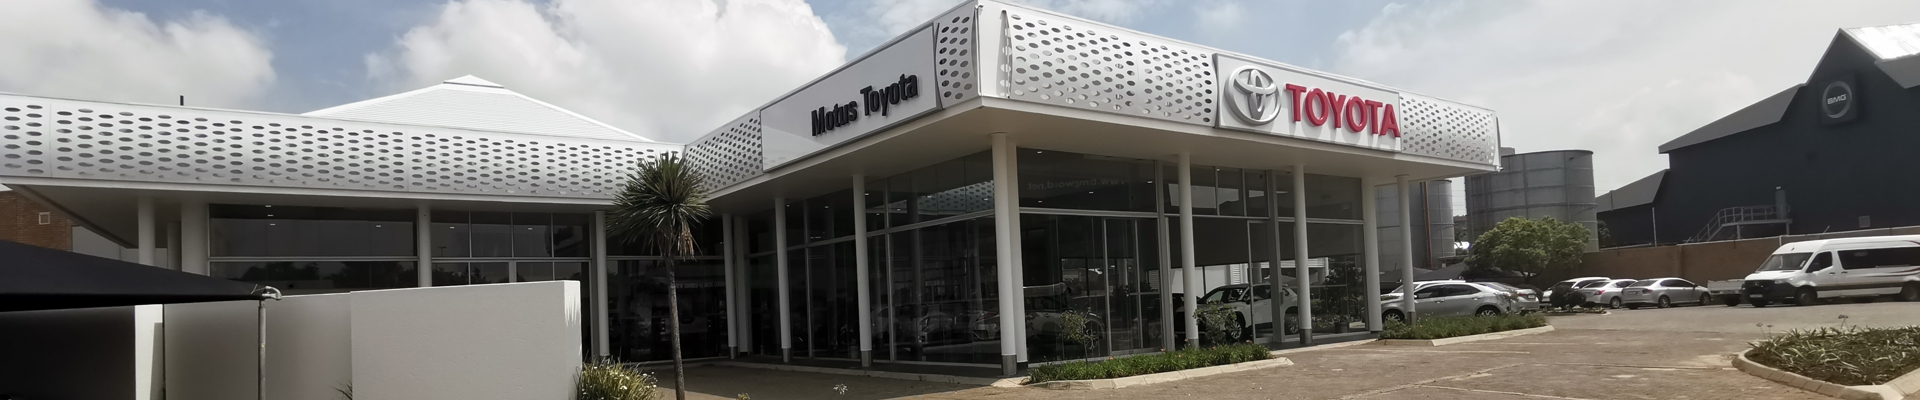 Motus Toyota Johannesburg City dealer image0